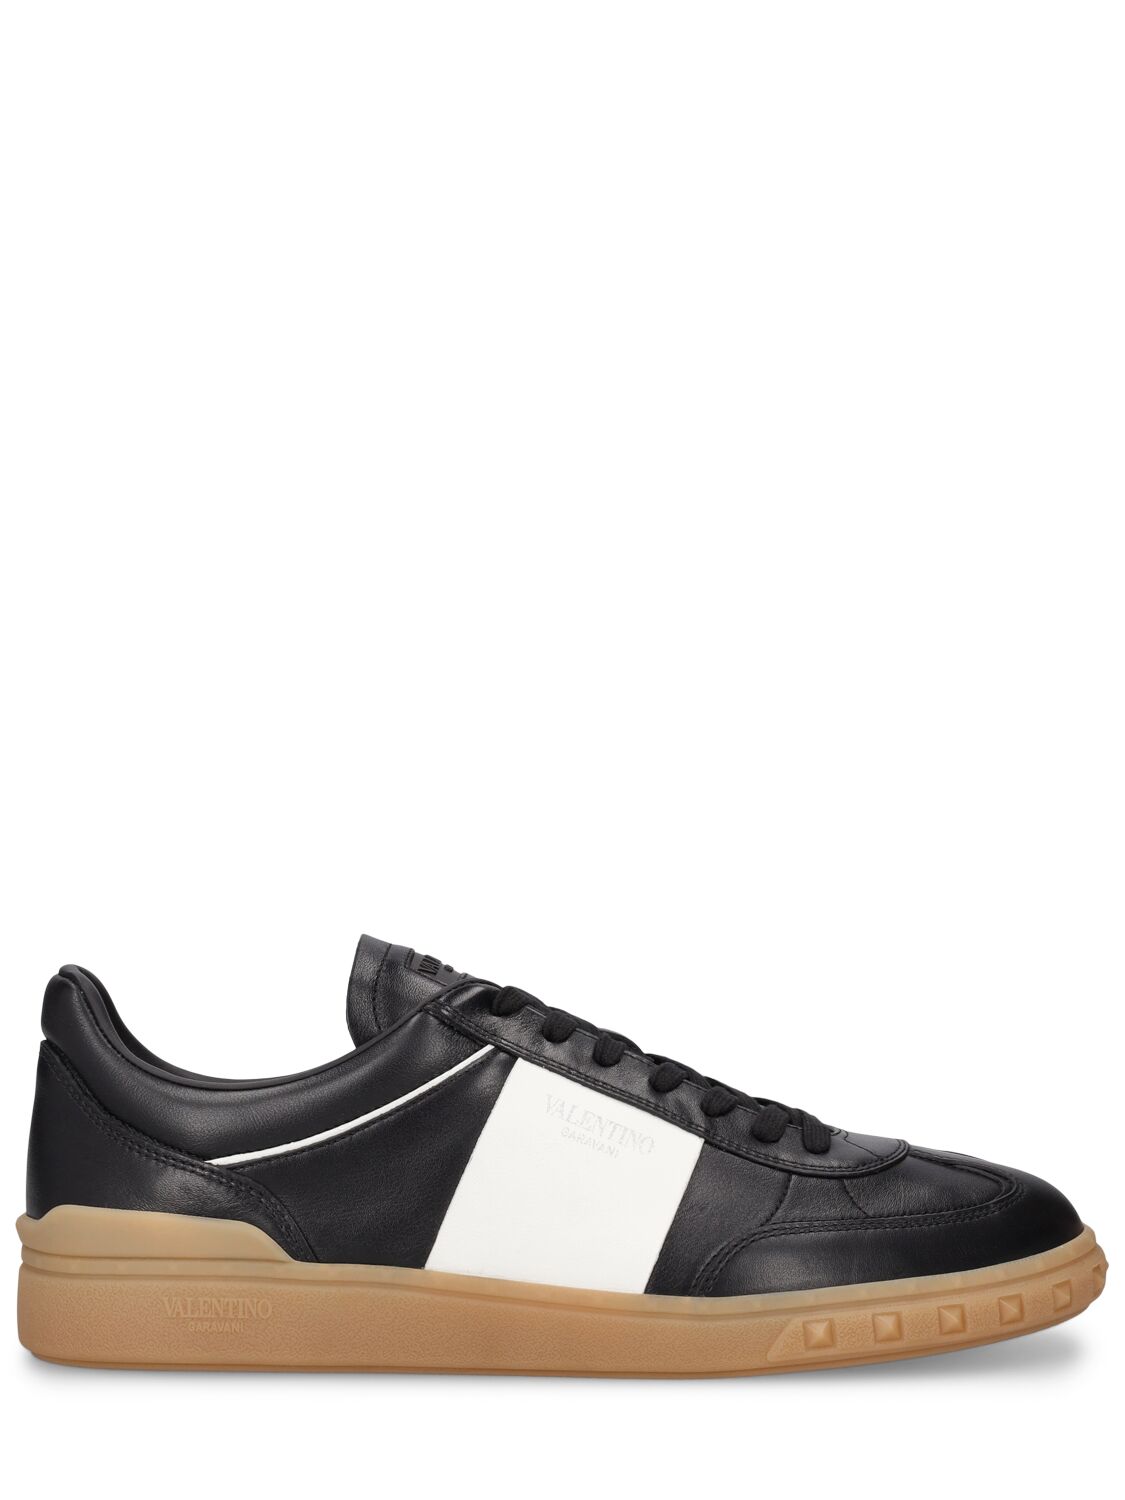 Valentino Garavani Nappa Leather Sneakers In Black,white